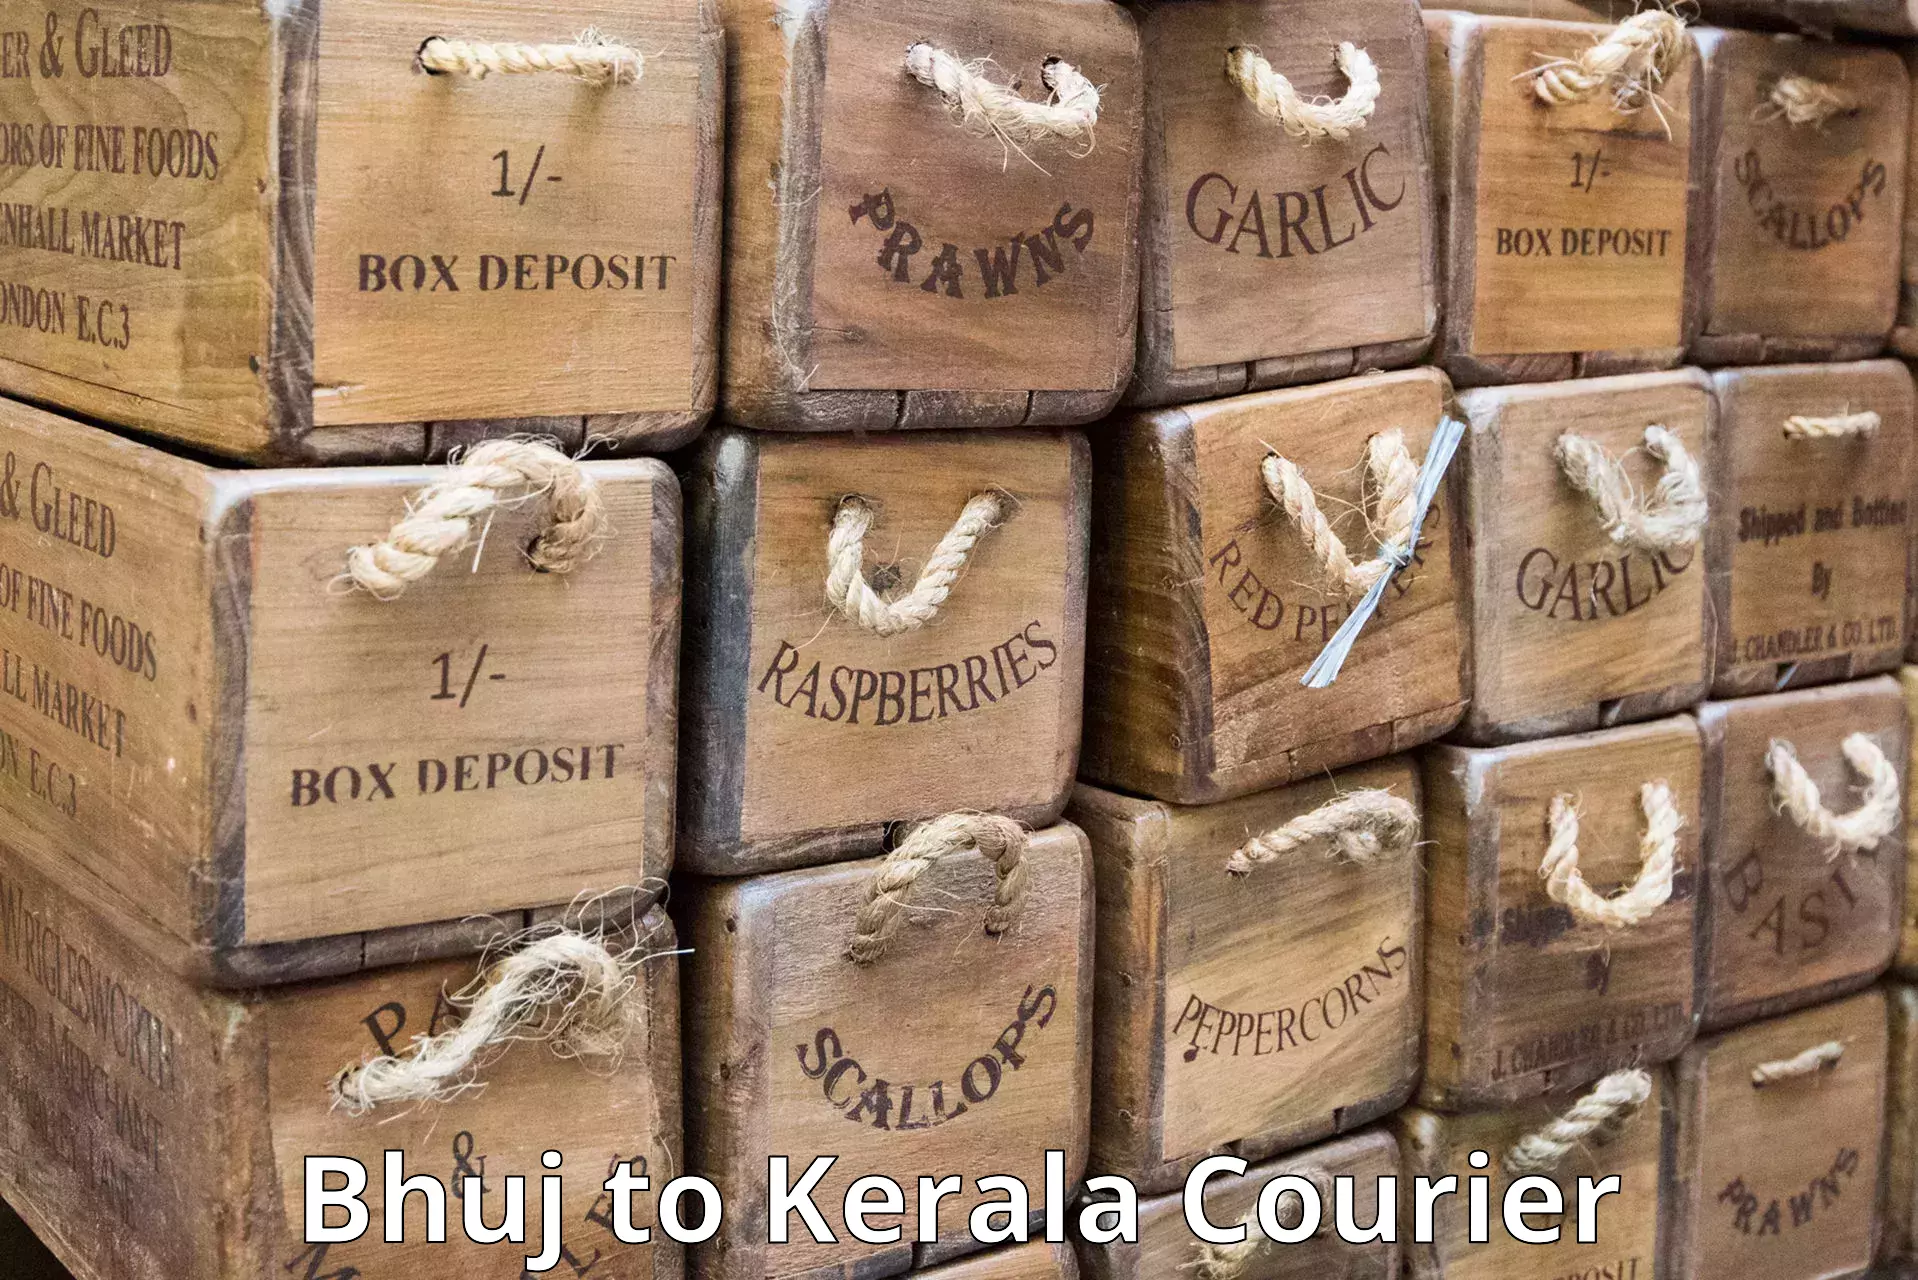 Multi-city courier Bhuj to Kozhencherry